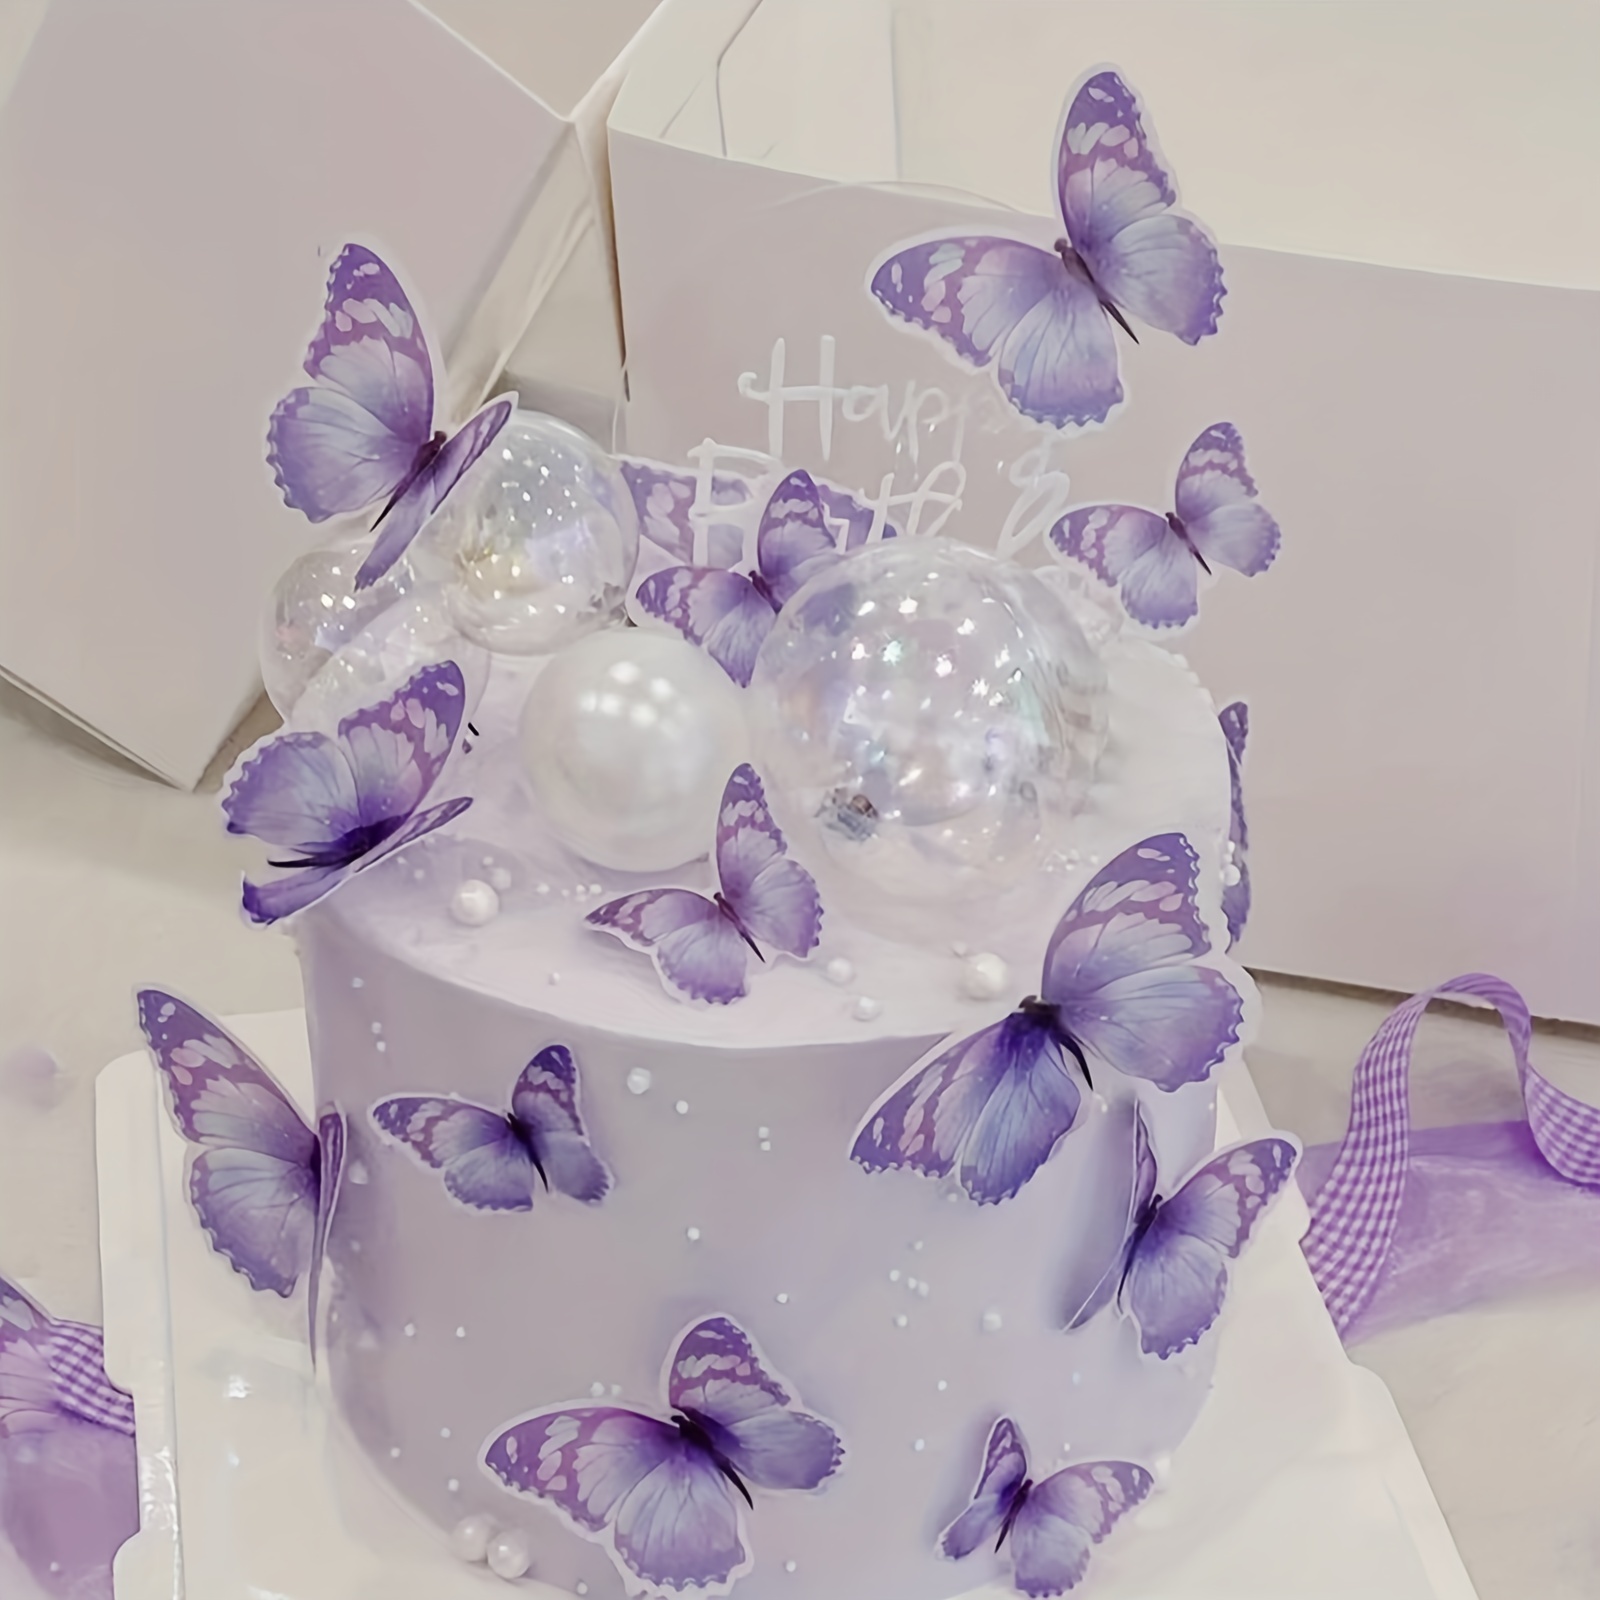 HOMSFOU 200pcs Butterfly Cake Insert Butterflies for Cake Purple Butterfly  Mariposas Decorativas Para Fiesta Cakes Mermaid Decor Butterflies Cake